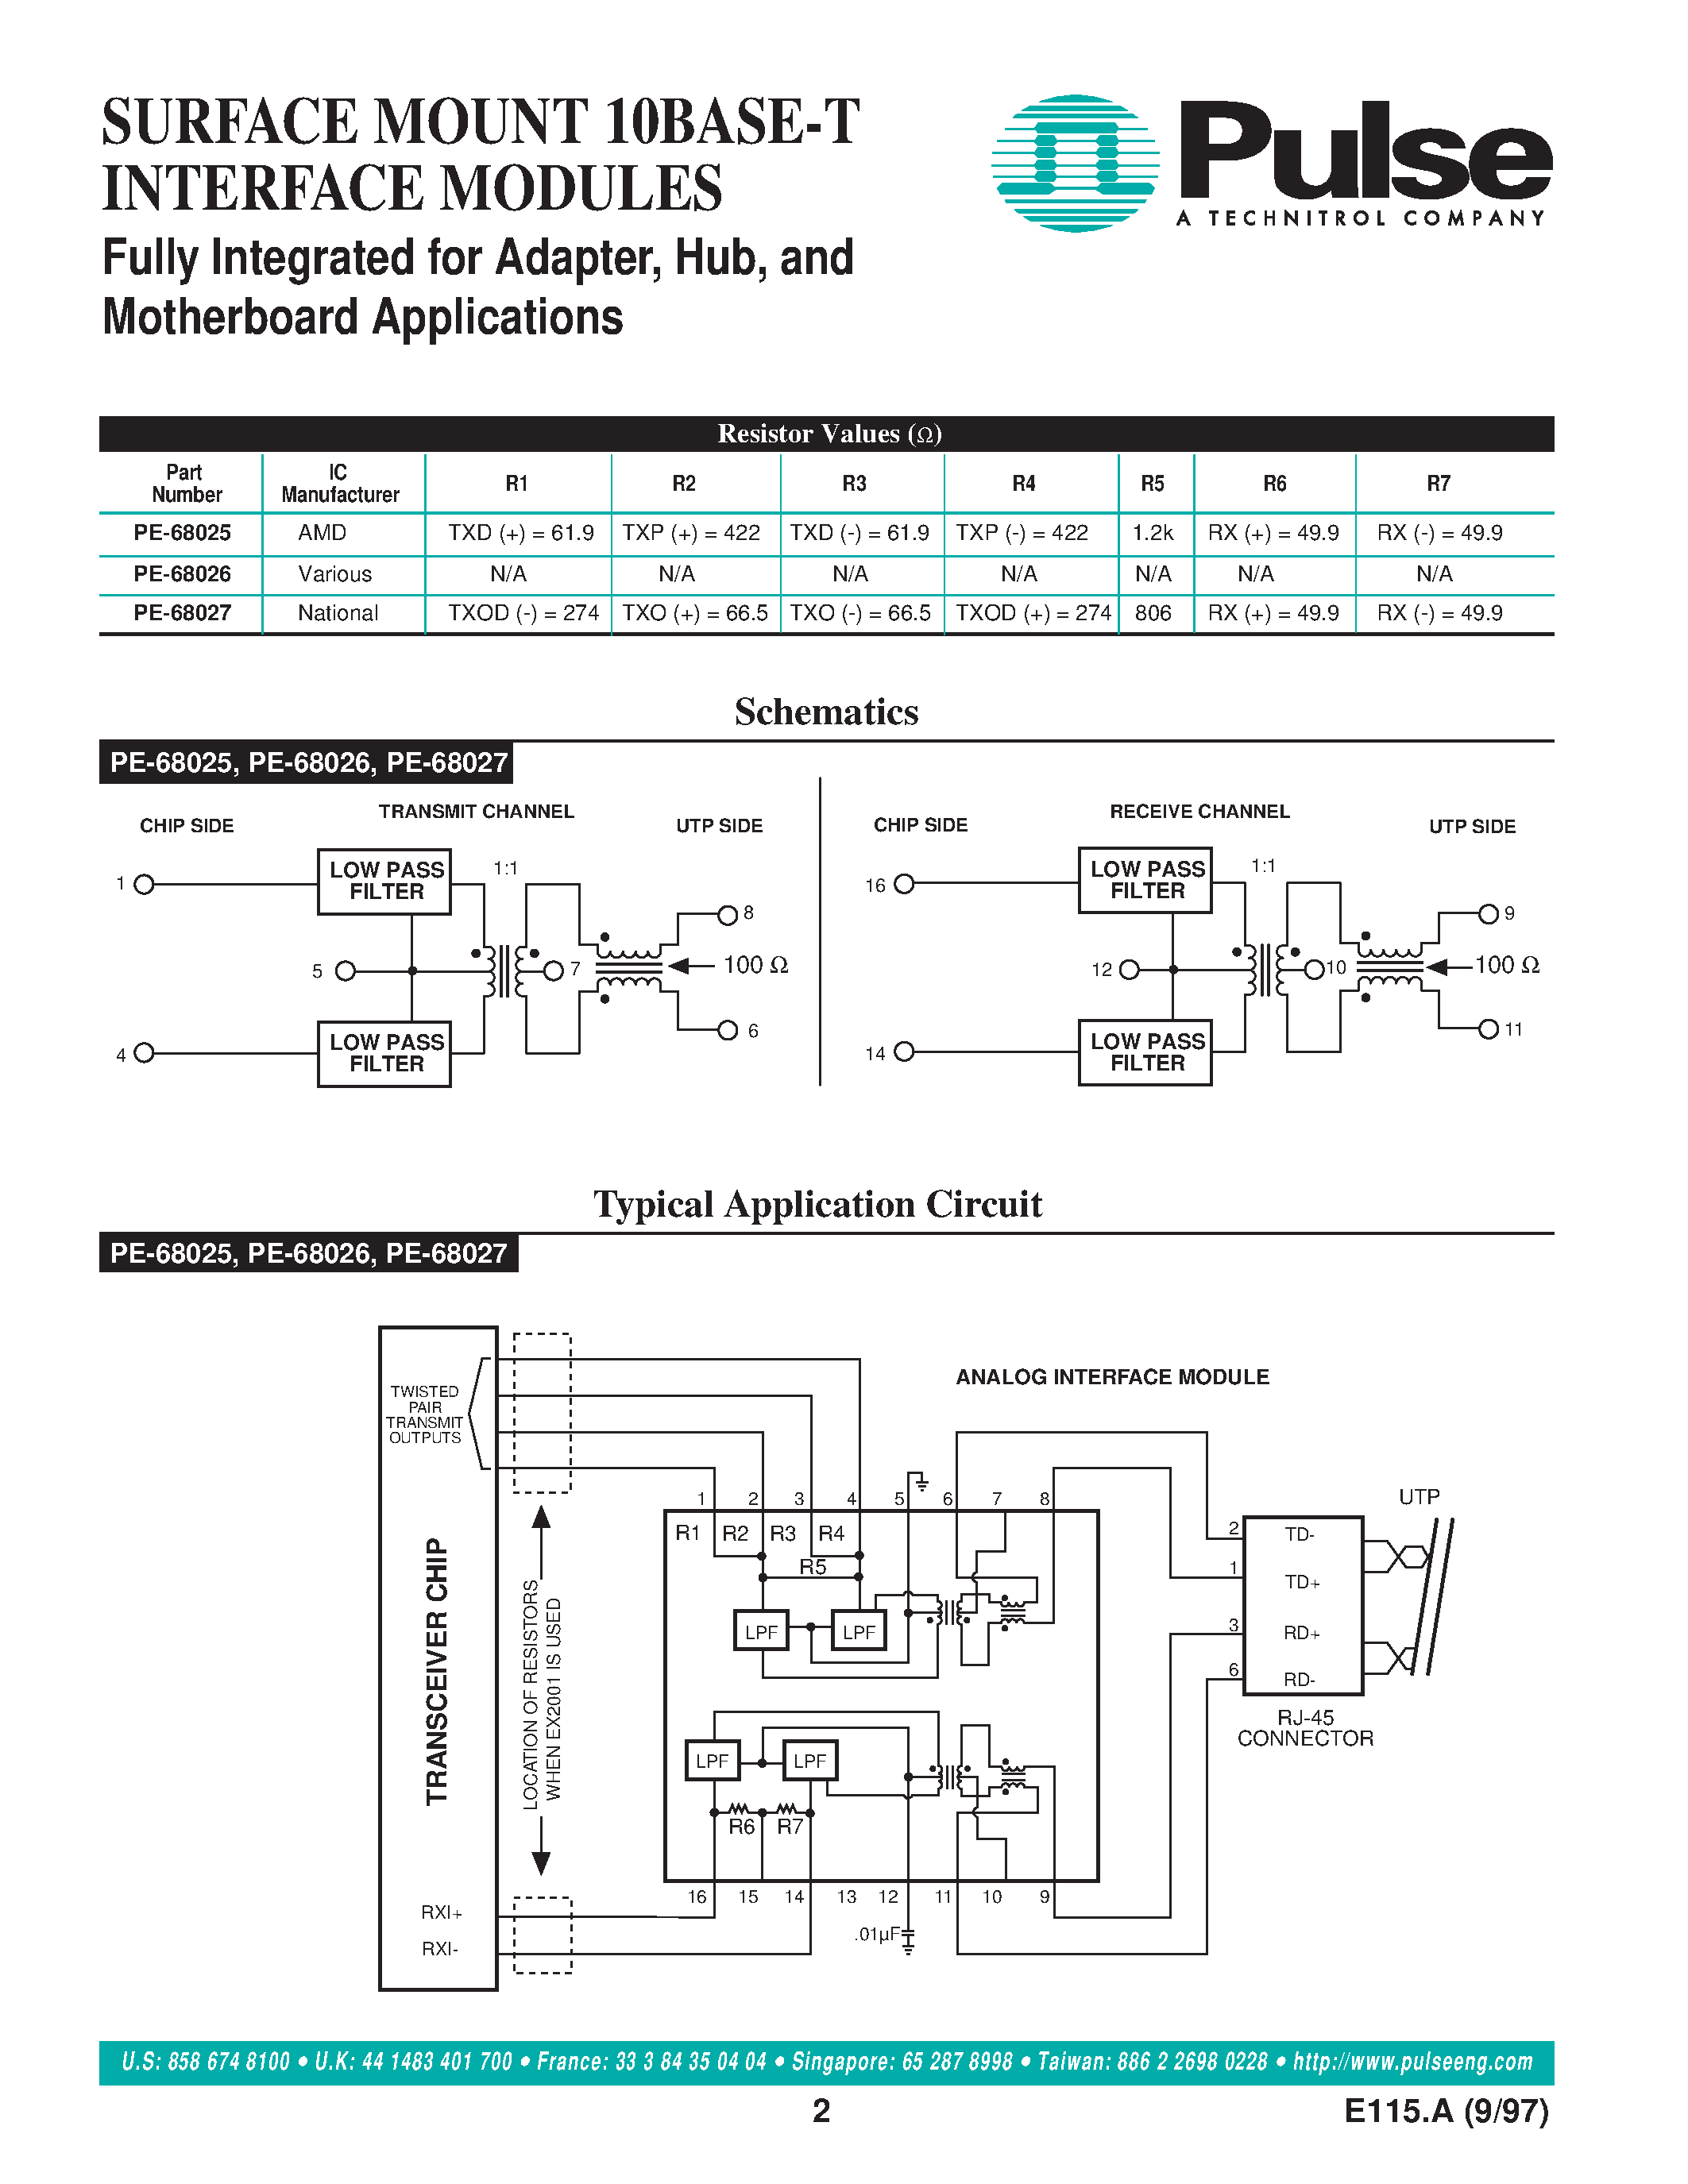 Datasheet PE-68025 - (PE-680xx) SURFACE MOUNT 10BASE-T INTERFACE MODULES page 2